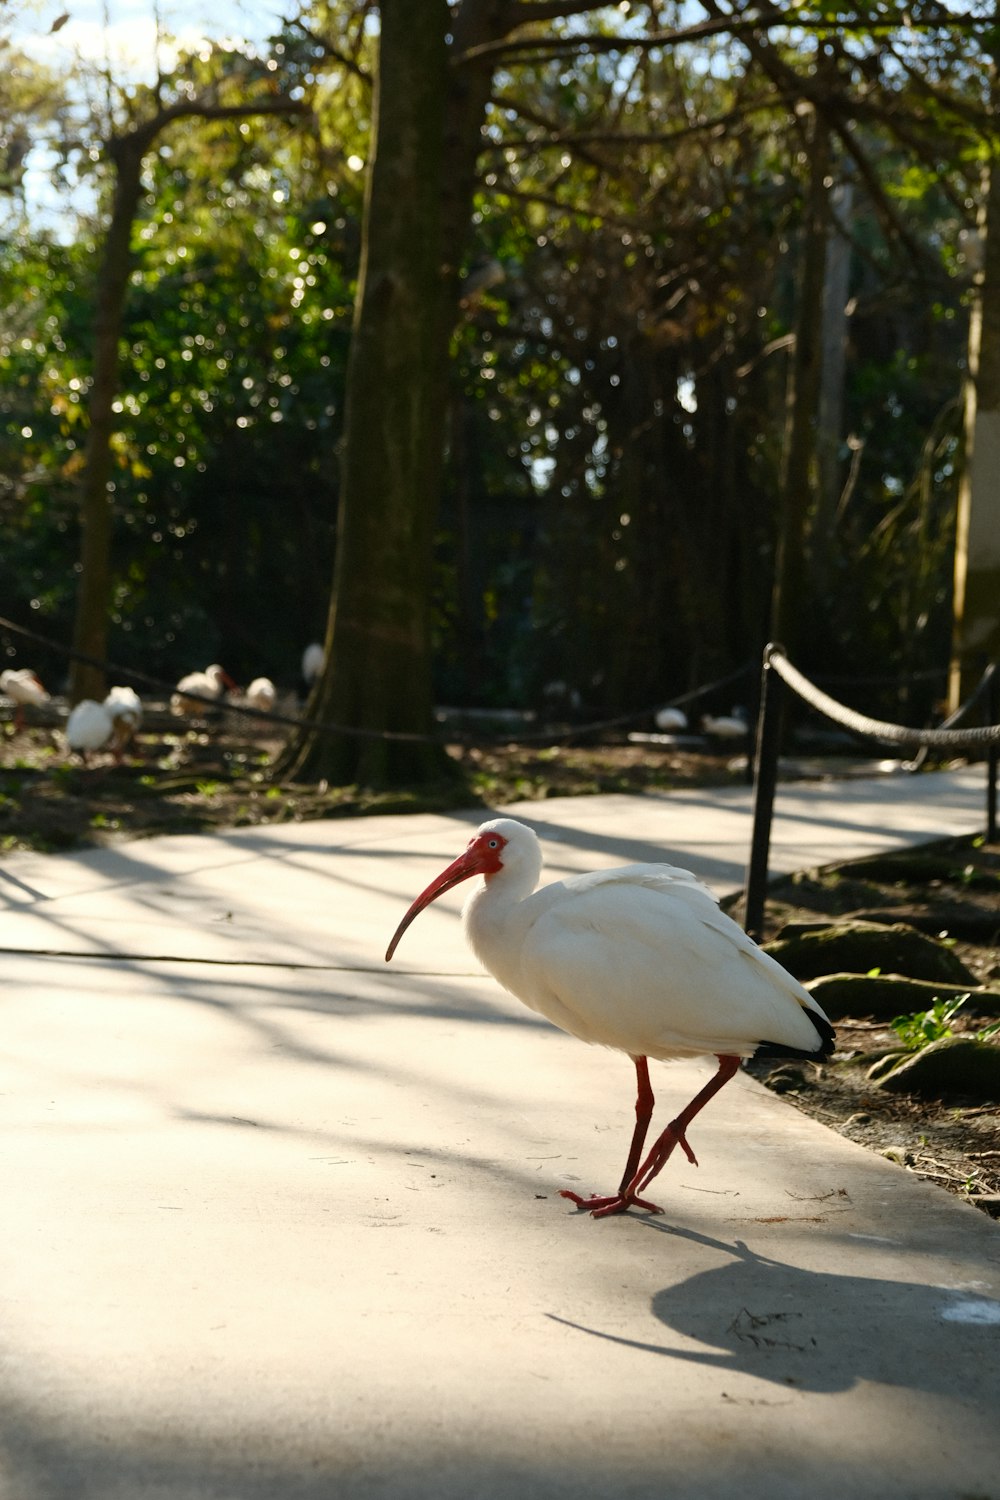 a white bird with a long beak standing on a sidewalk